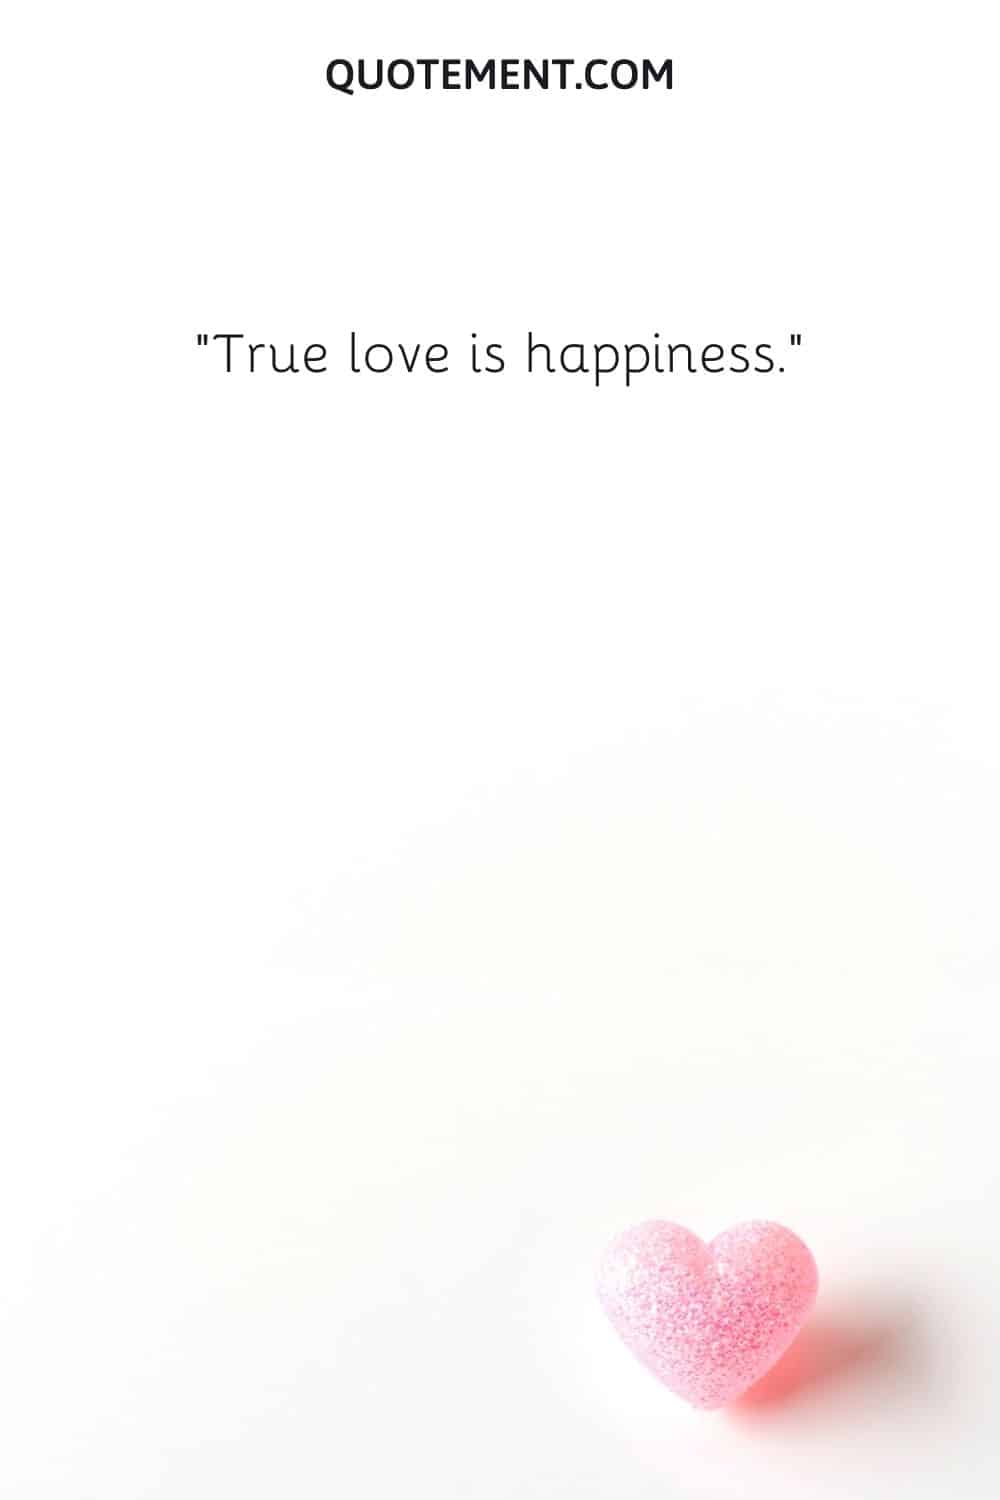 True love is happiness.